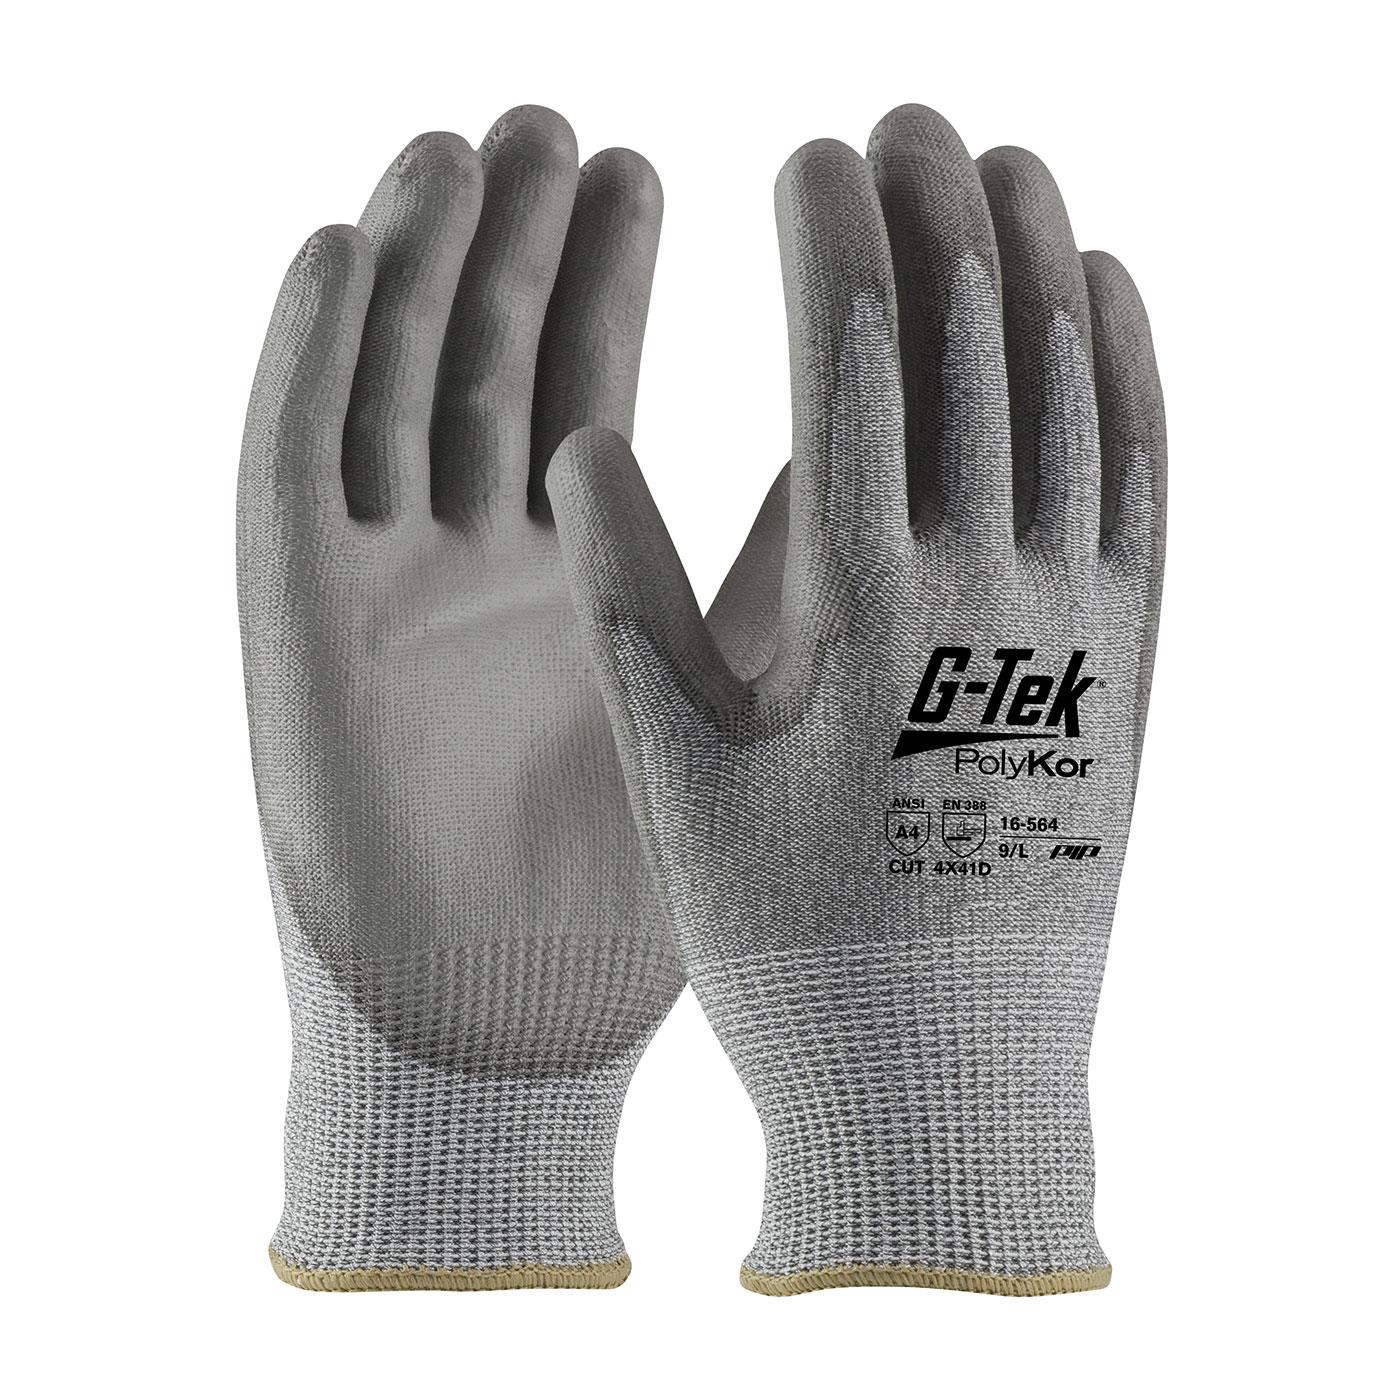 G-TEK POLYKOR 16-564 PU PALM COAT - Cut Resistant Gloves